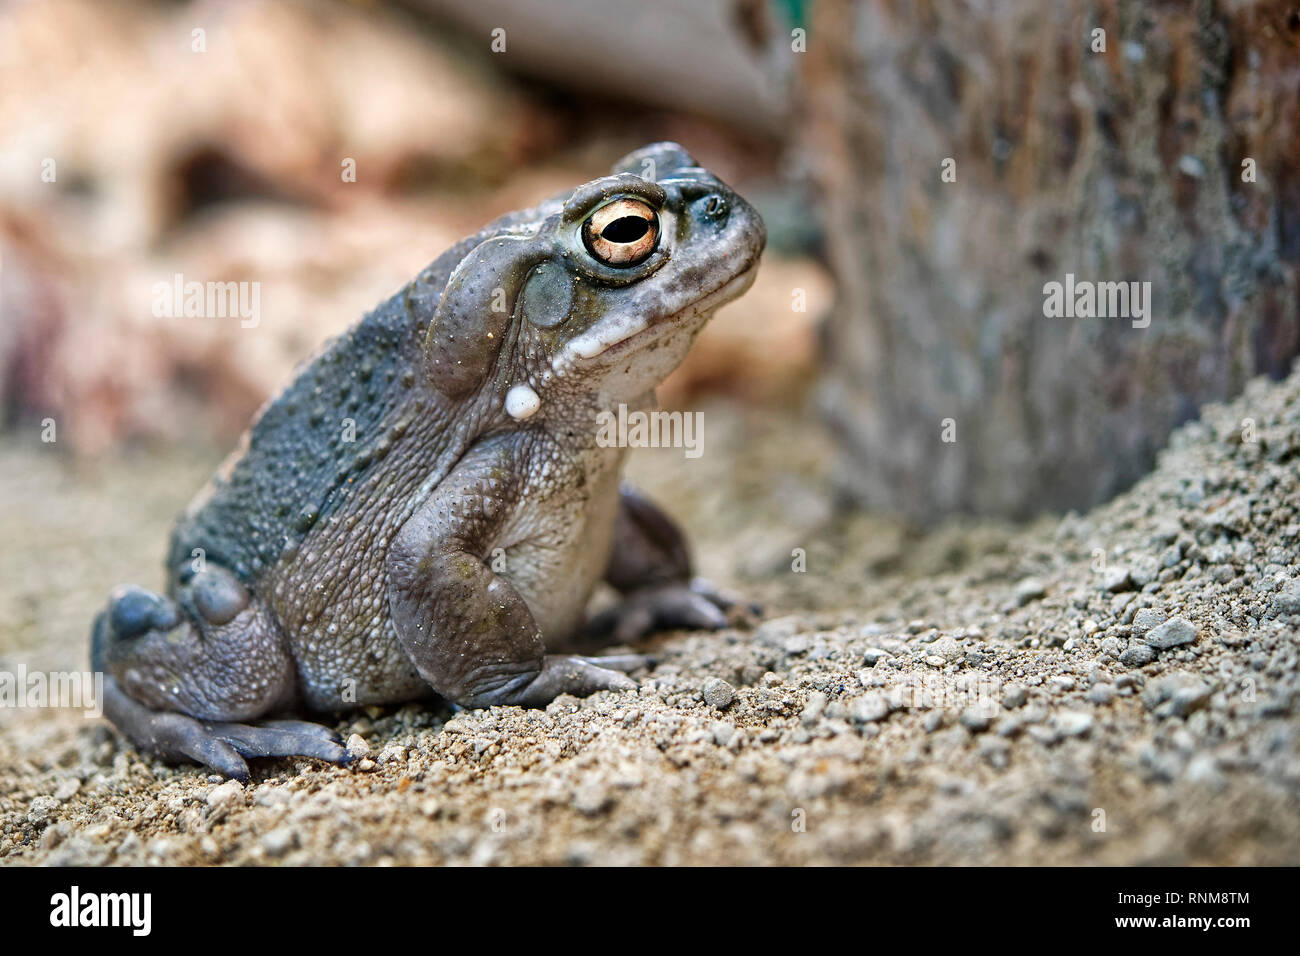 Colorado river toad (ou désert de Sonora) - crapaud Bufo alvarius / Incilius alvarius Banque D'Images